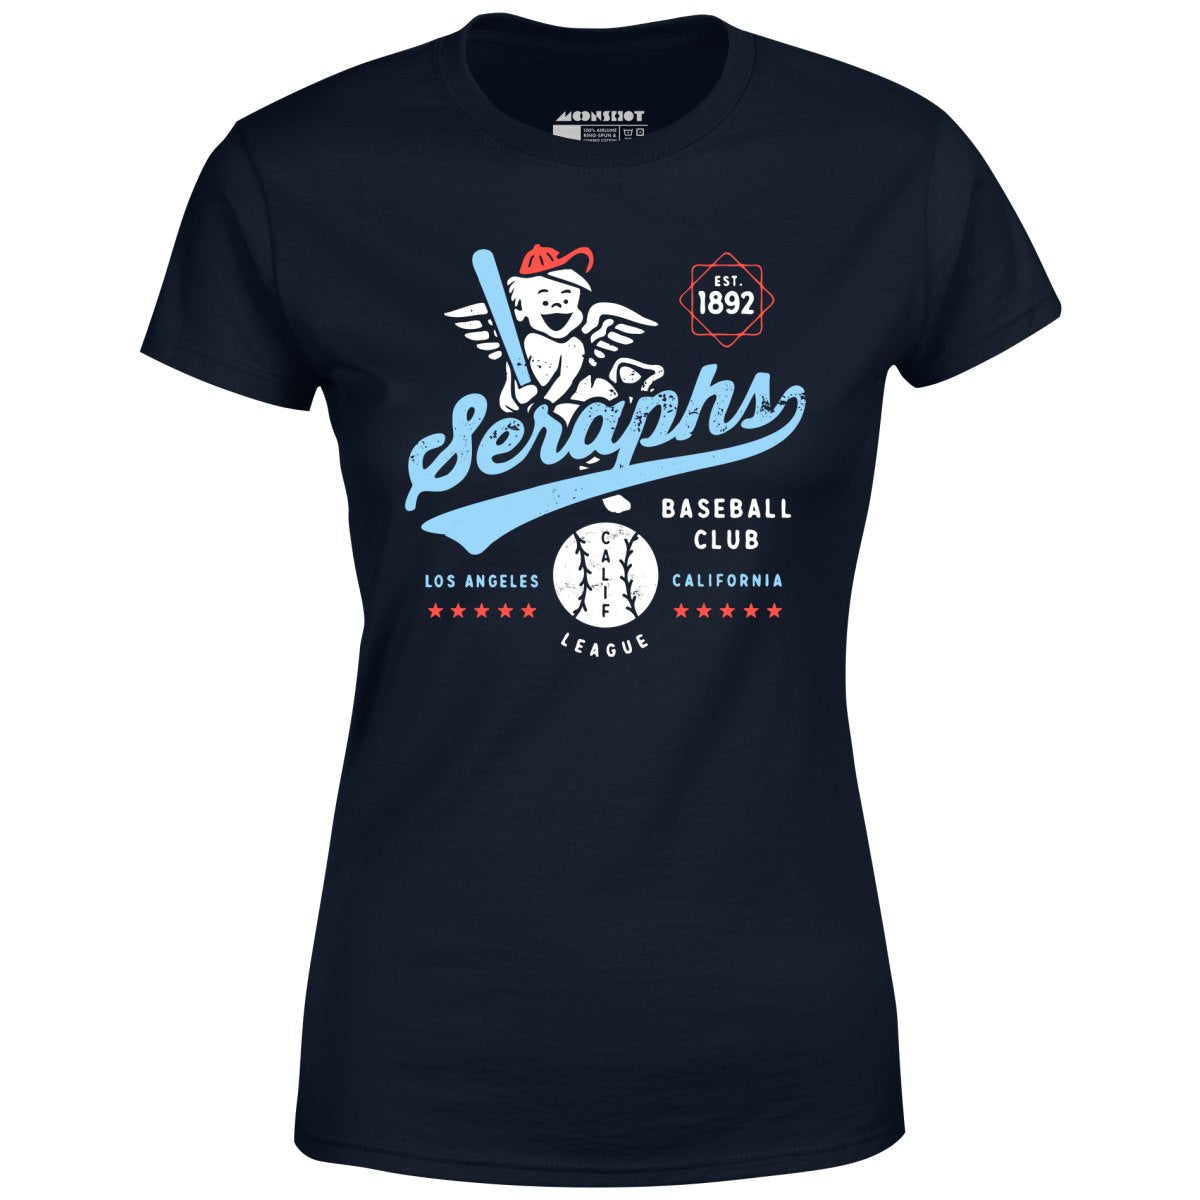 Los Angeles Seraphs - California - Vintage Defunct Baseball Teams - Women's T-Shirt